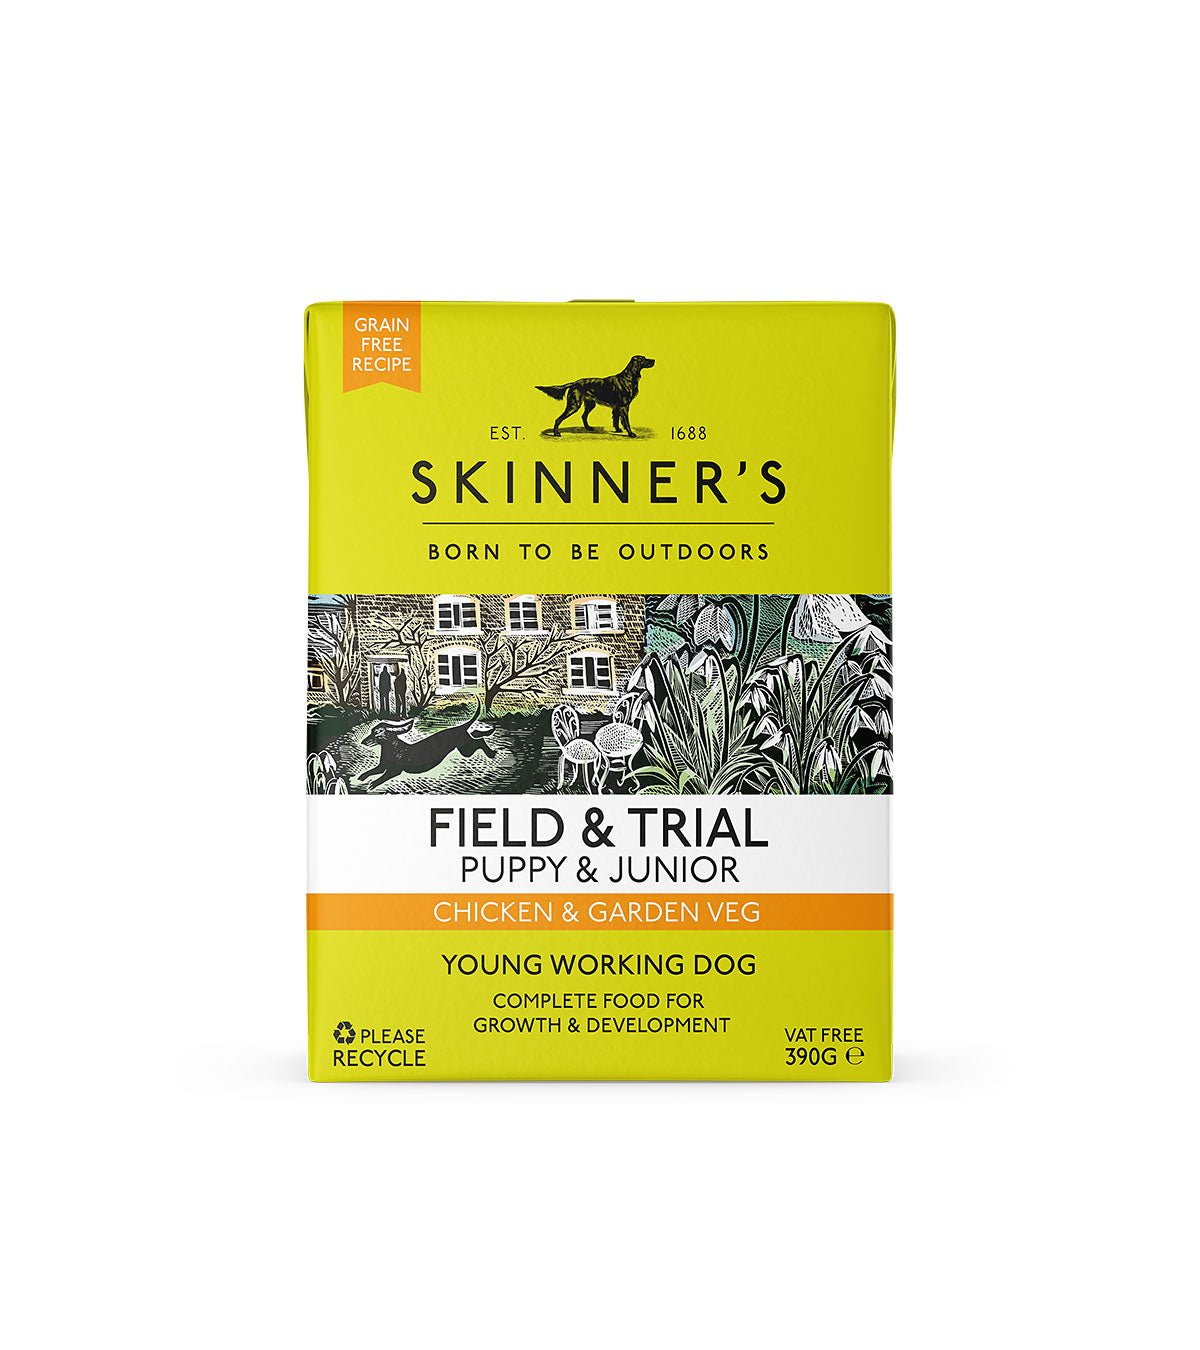 Skinner's Field & Trial Food, Treats and Energy Bars